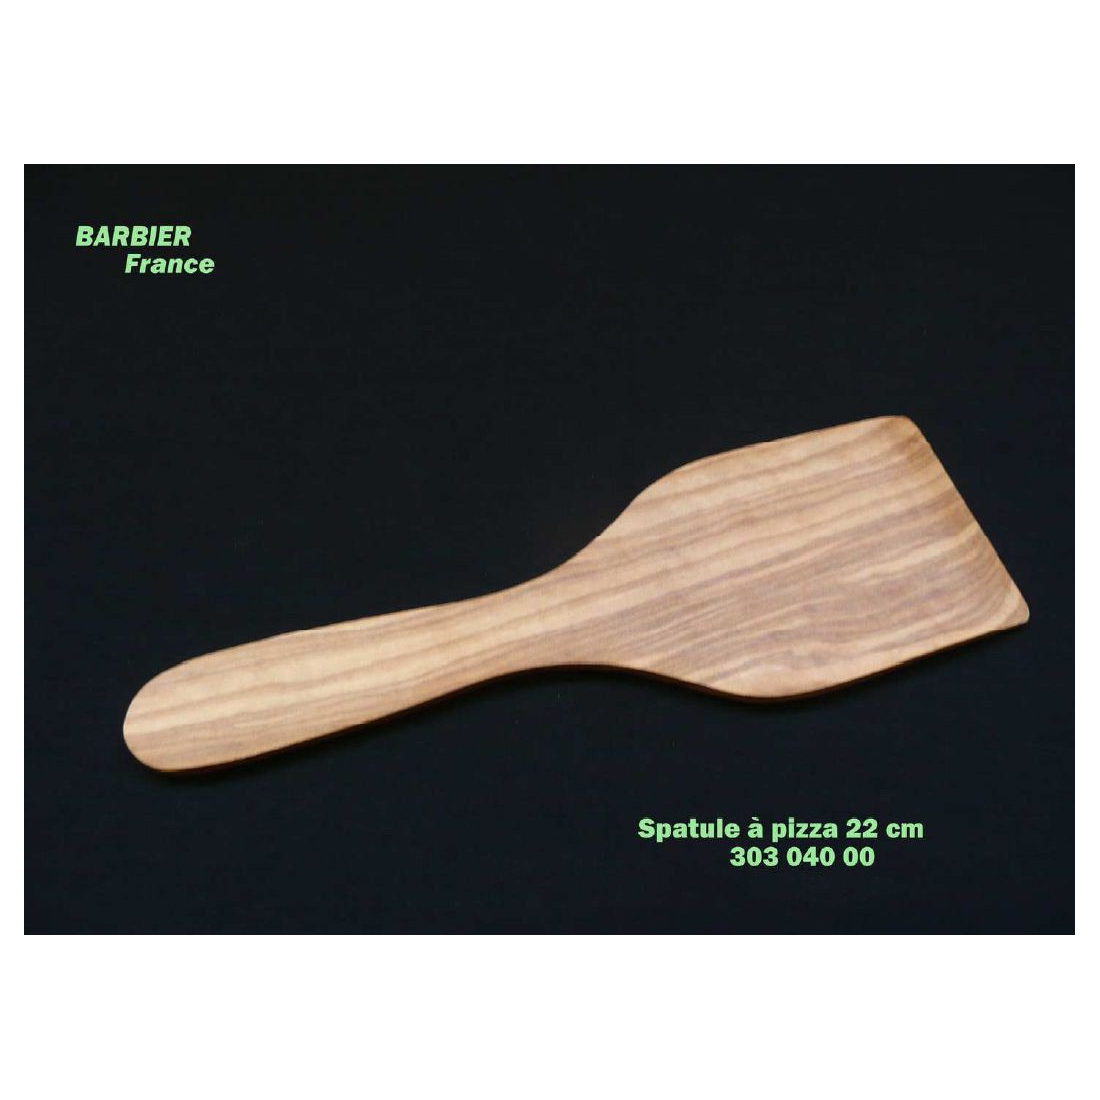 Pizza spatula L22 in olive wood LB B18-303040 LAURENT BARBIER France Utensils Special Pizza